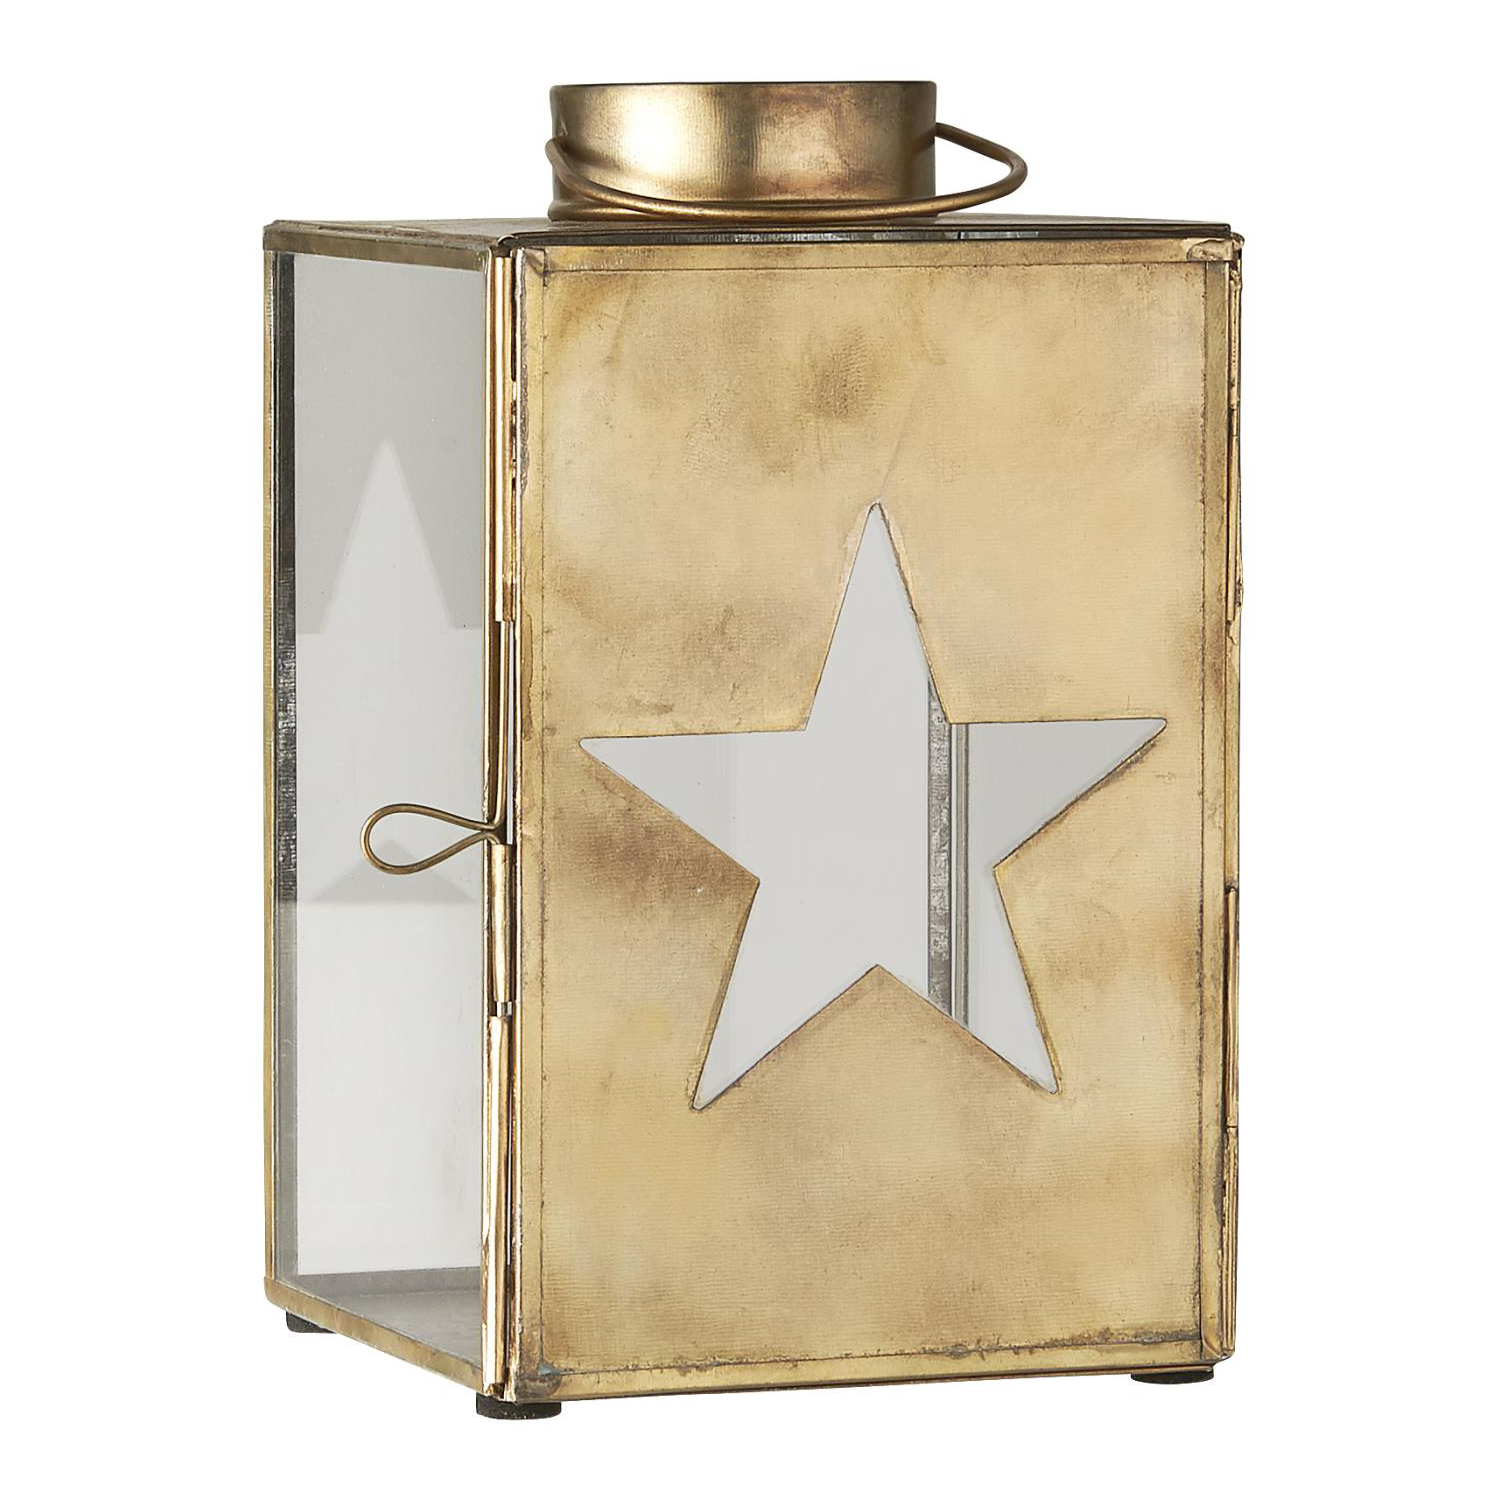 Ib Laursen Brass Lantern with Star Cut Out Design